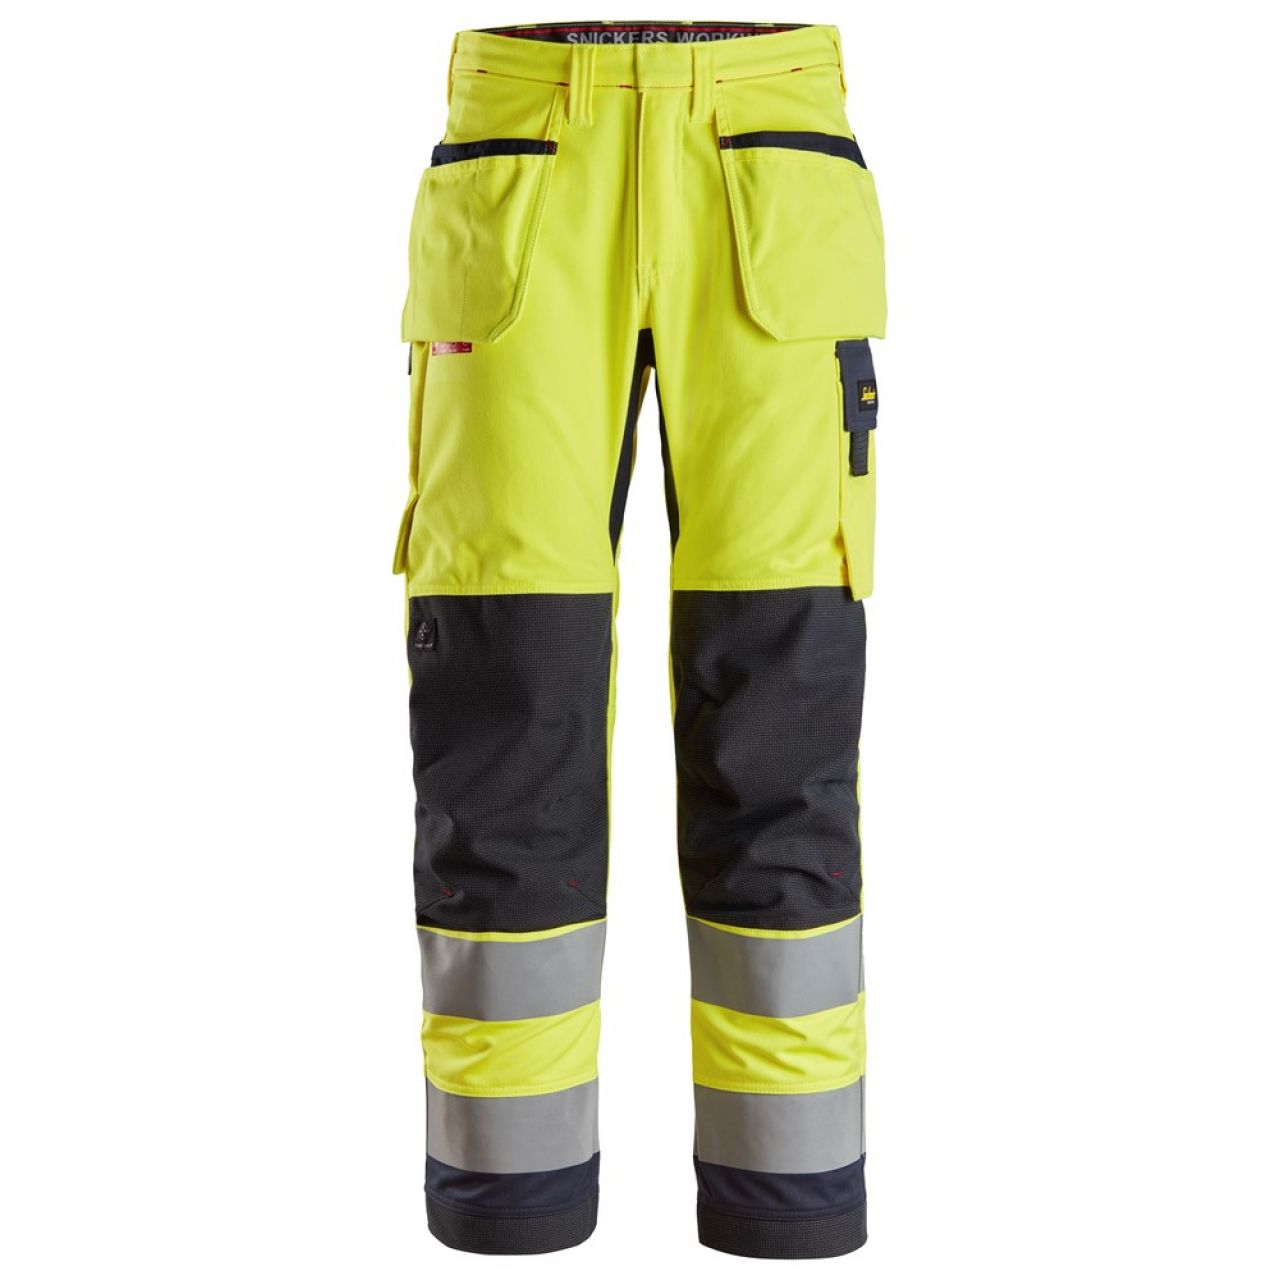 6260 Pantalones largos de trabajo de alta visibilidad clase 2 con bolsillos flotantes ProtecWork amarillo-azul marino talla 56